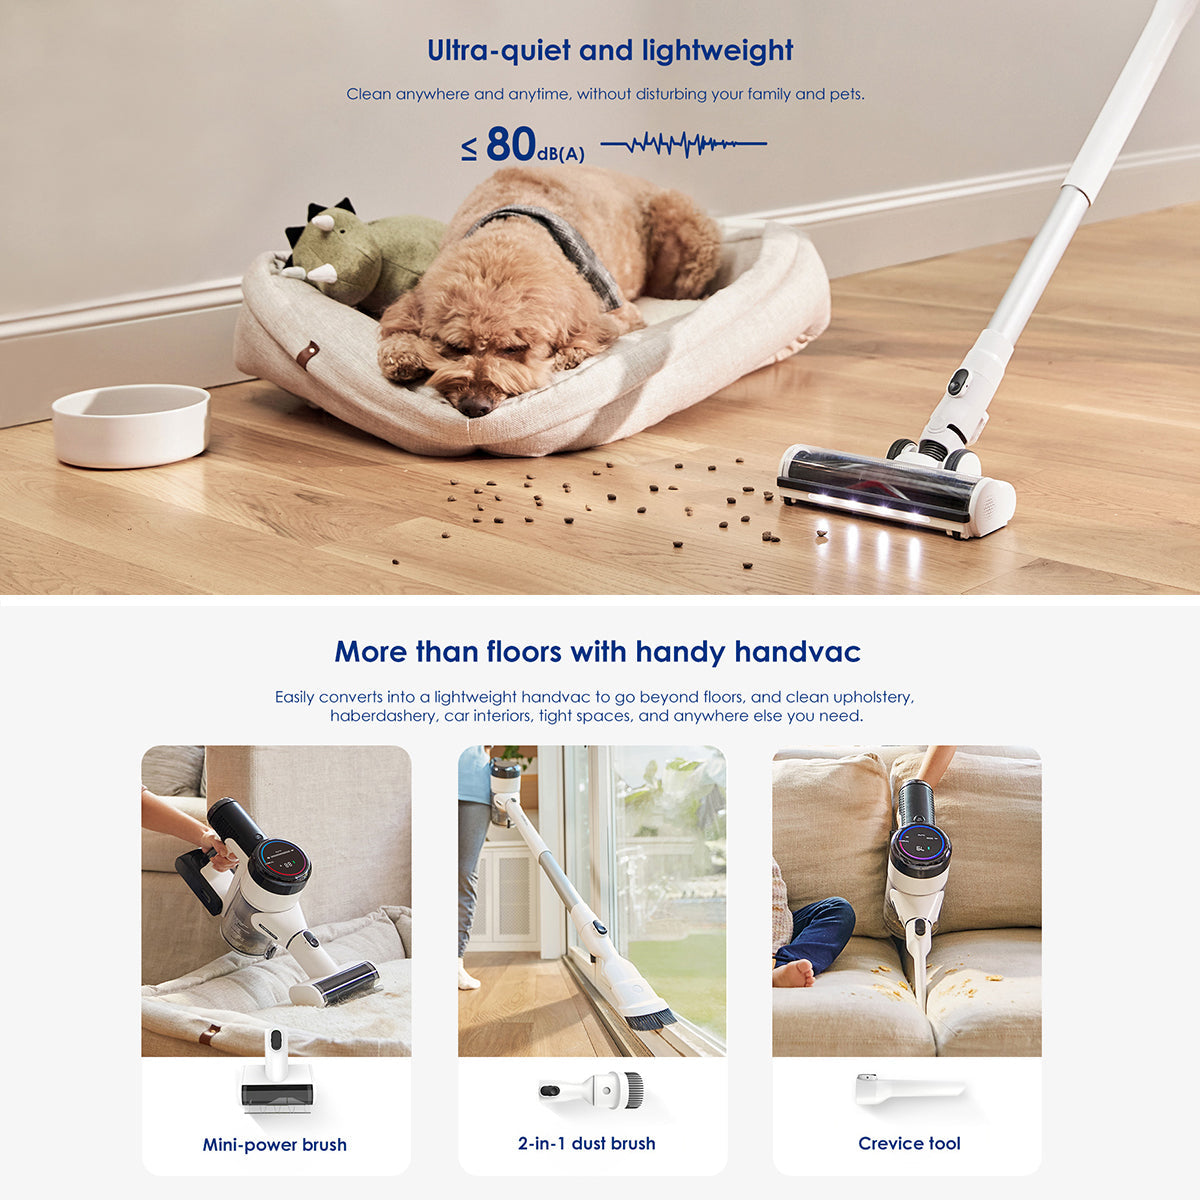 Tineco PURE ONE S15 PET - Smart Cordless Vacuum & HandVac Stick + MiniBrush